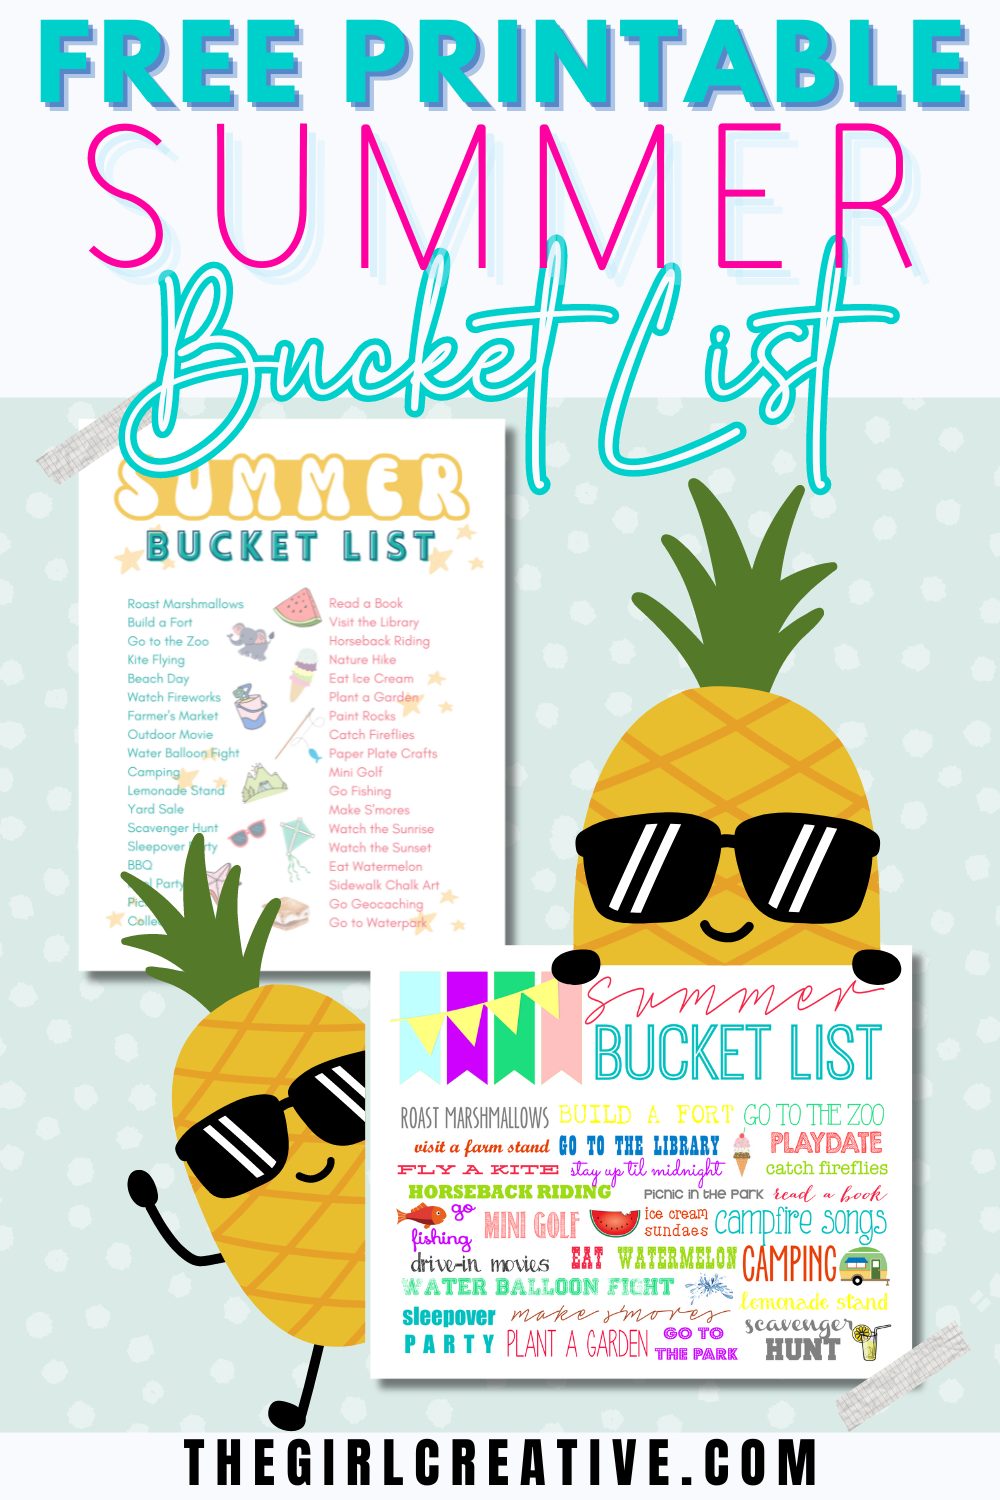 Fun Memory Making Bucket List Ideas for Summer